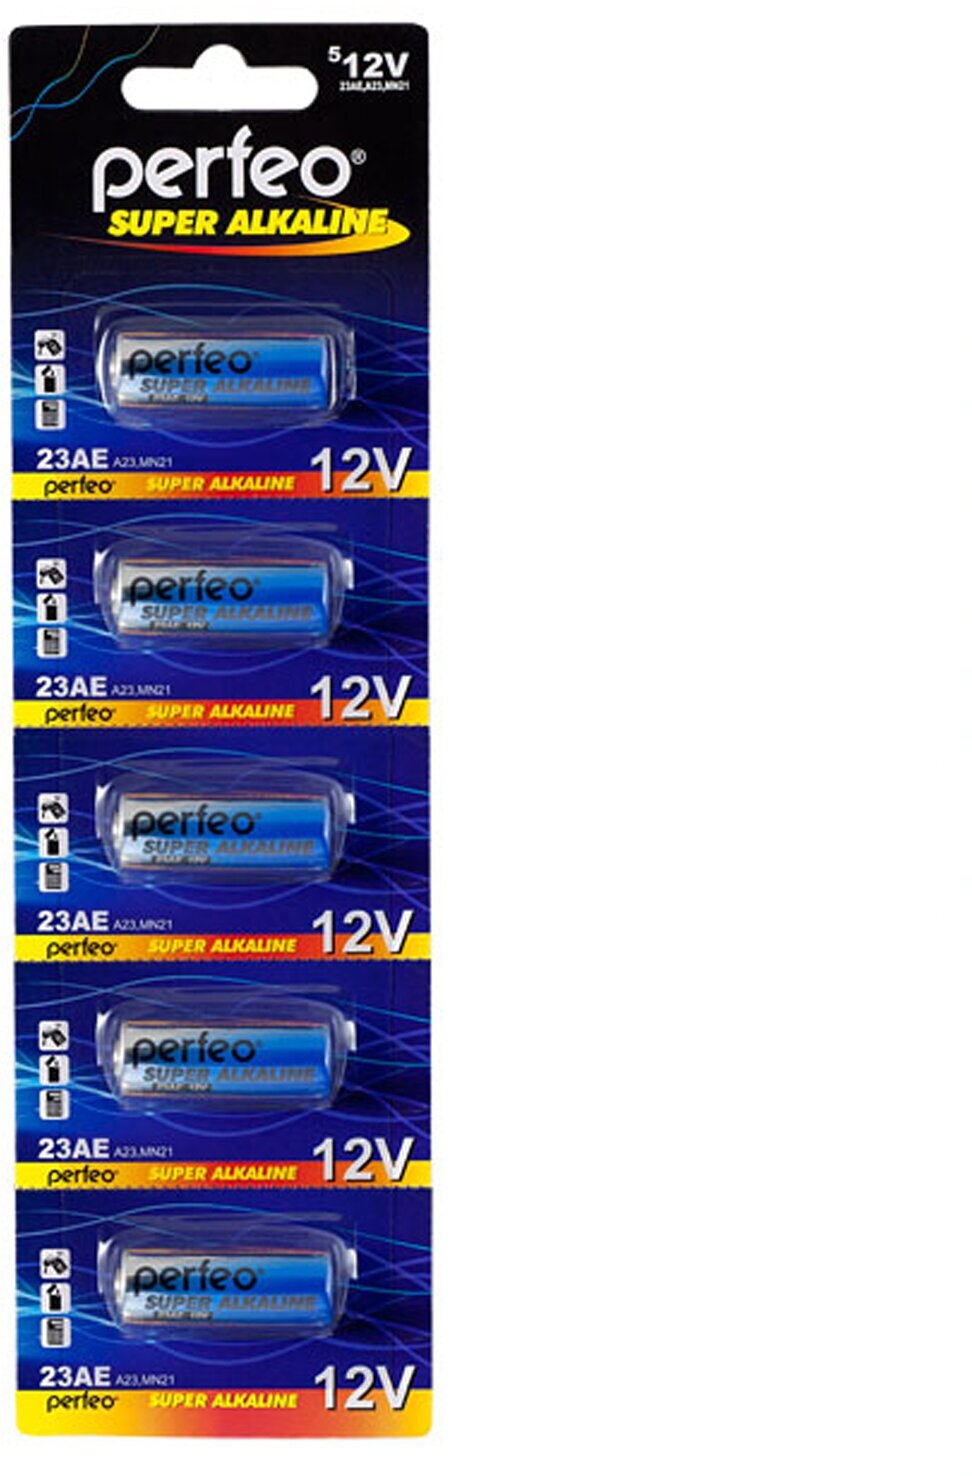 Батарейки Perfeo 23AE (23A, MN21, A23) Super Alkaline алкалиновые (щелочные), 5шт, 12V